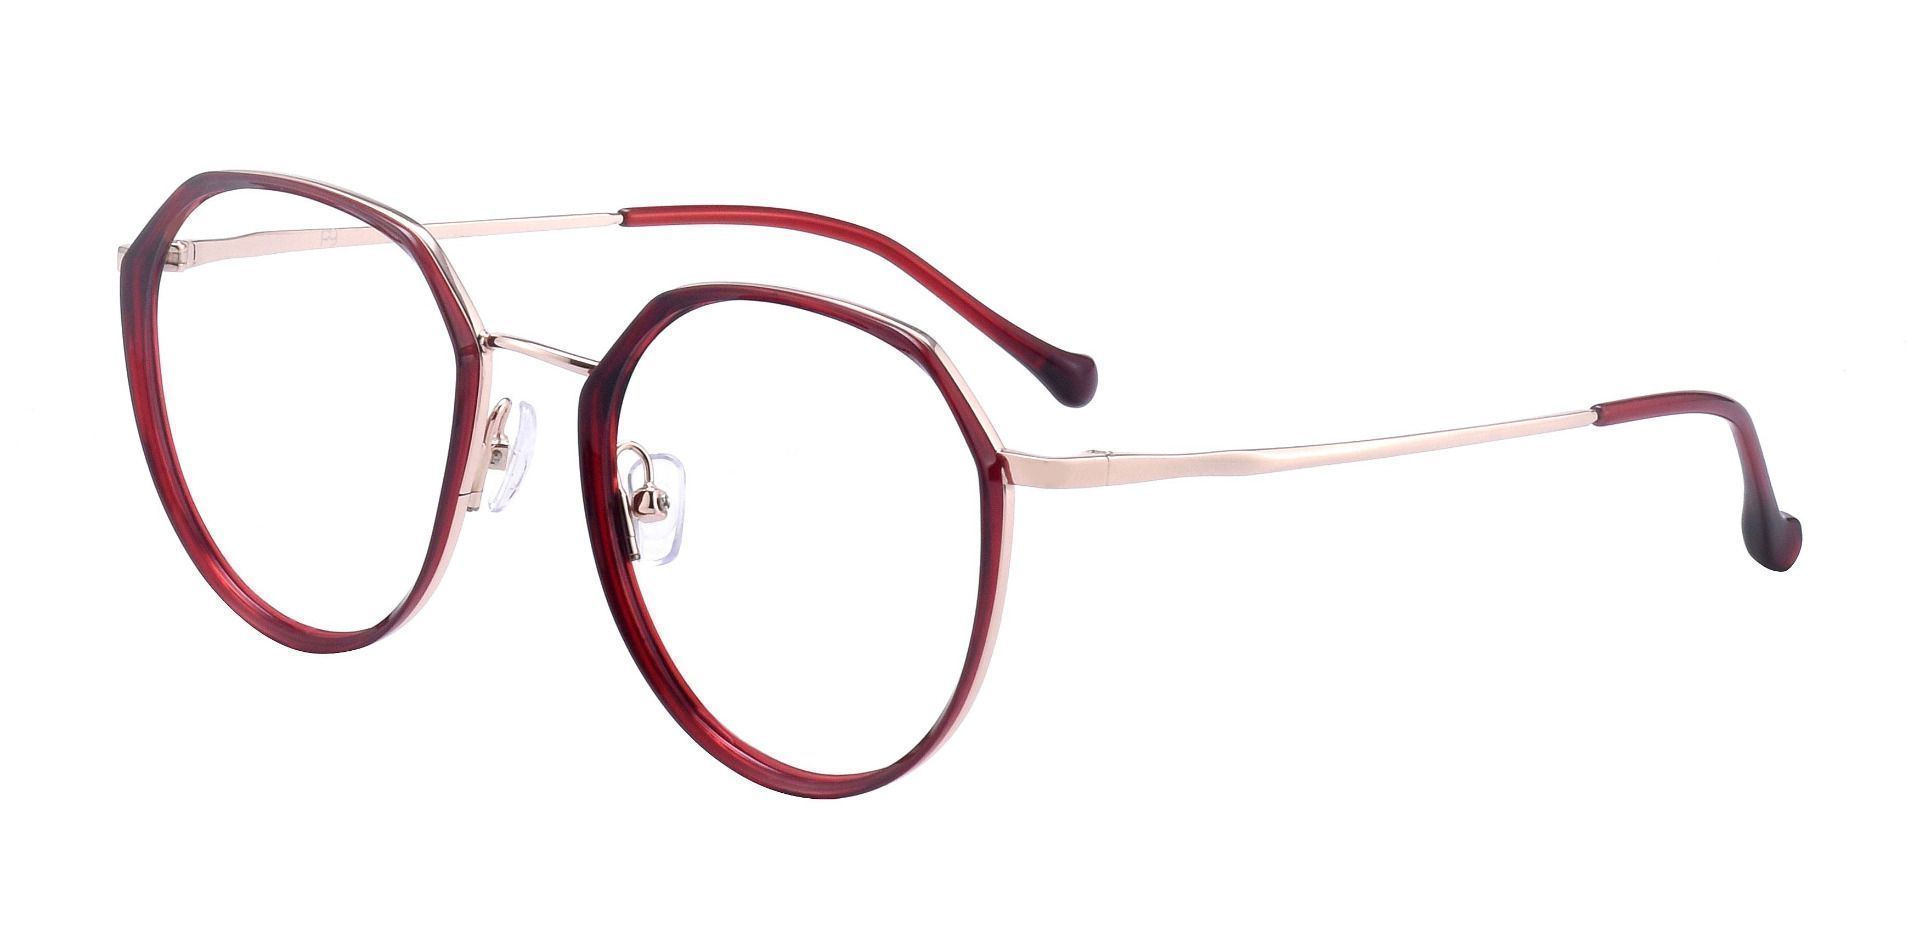 Yorke Geometric Lined Bifocal Glasses - Wine/rosegold